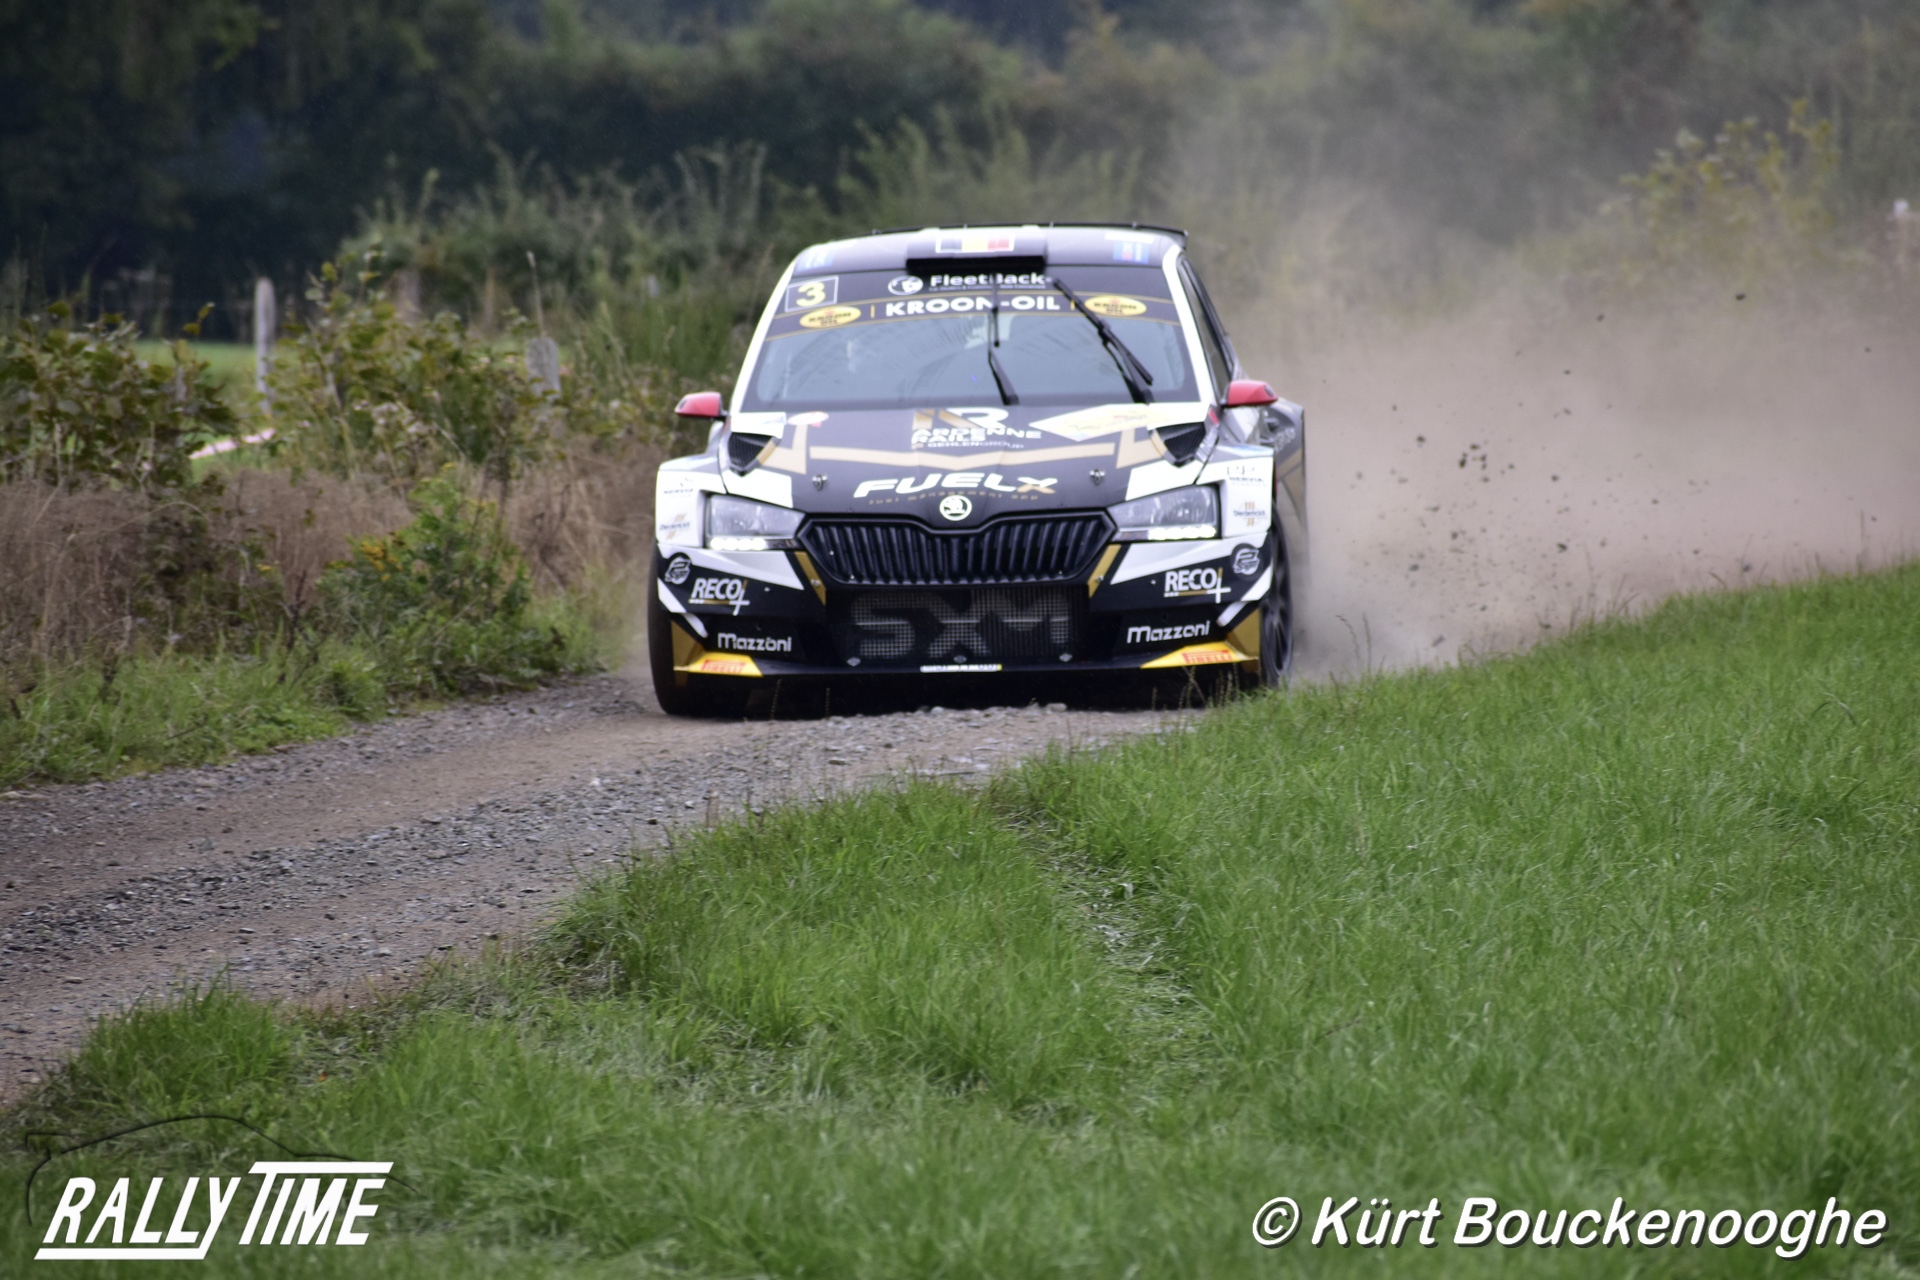 East Belgian Rally - Sterke Adrian Fernémont plooit pas op de voorlaatste proef